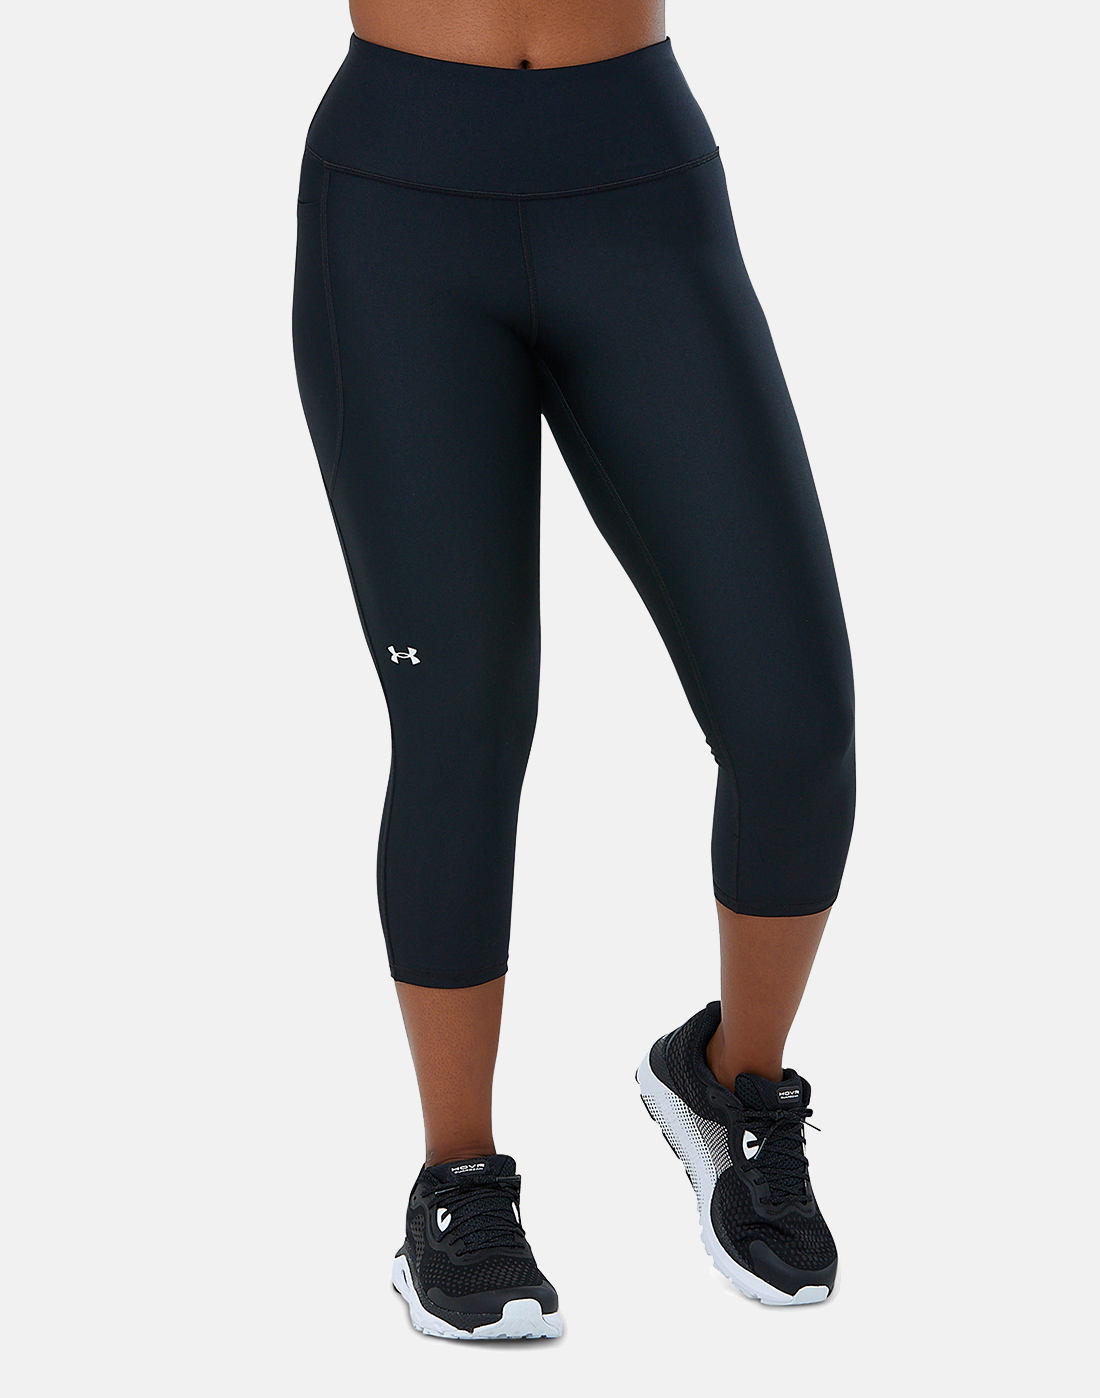 Under Armour Capri Leggings Women High Rise Gym Wear Size M 12 Medium 